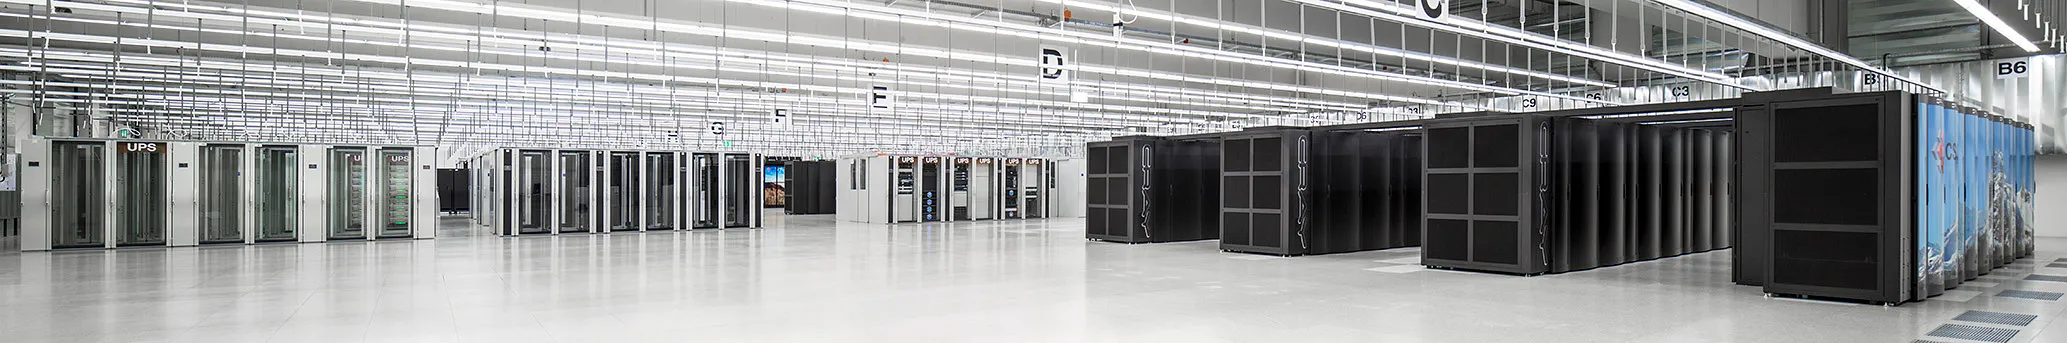 Swiss National Supercomputing Centre - CSCS